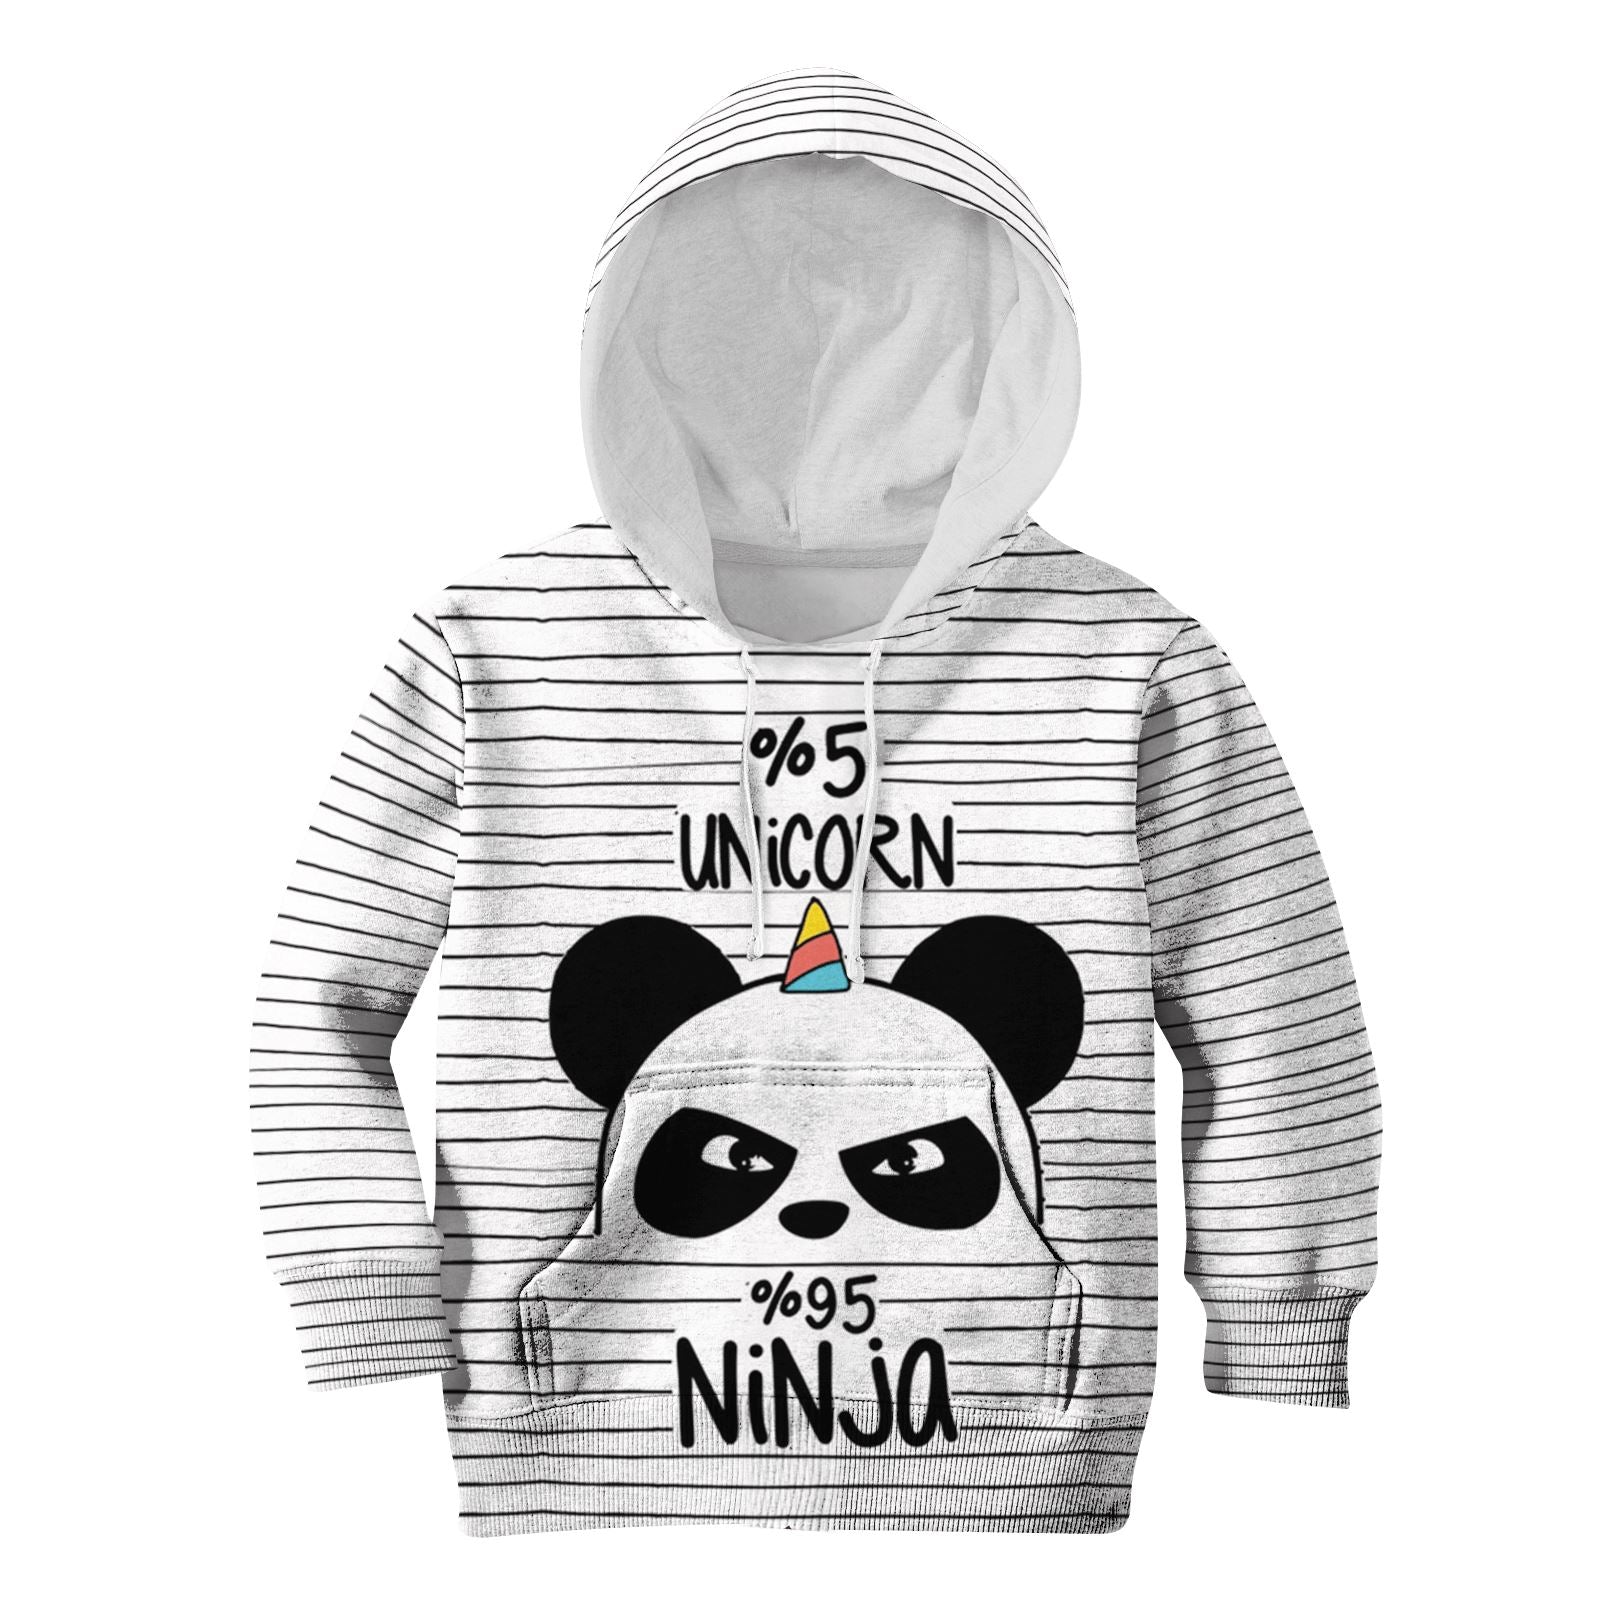 5% Unicorn 95% Ninja Custom Hoodies T-shirt Apparel HD-UNI110112K kid 3D apparel Kid Hoodie S/6-8 